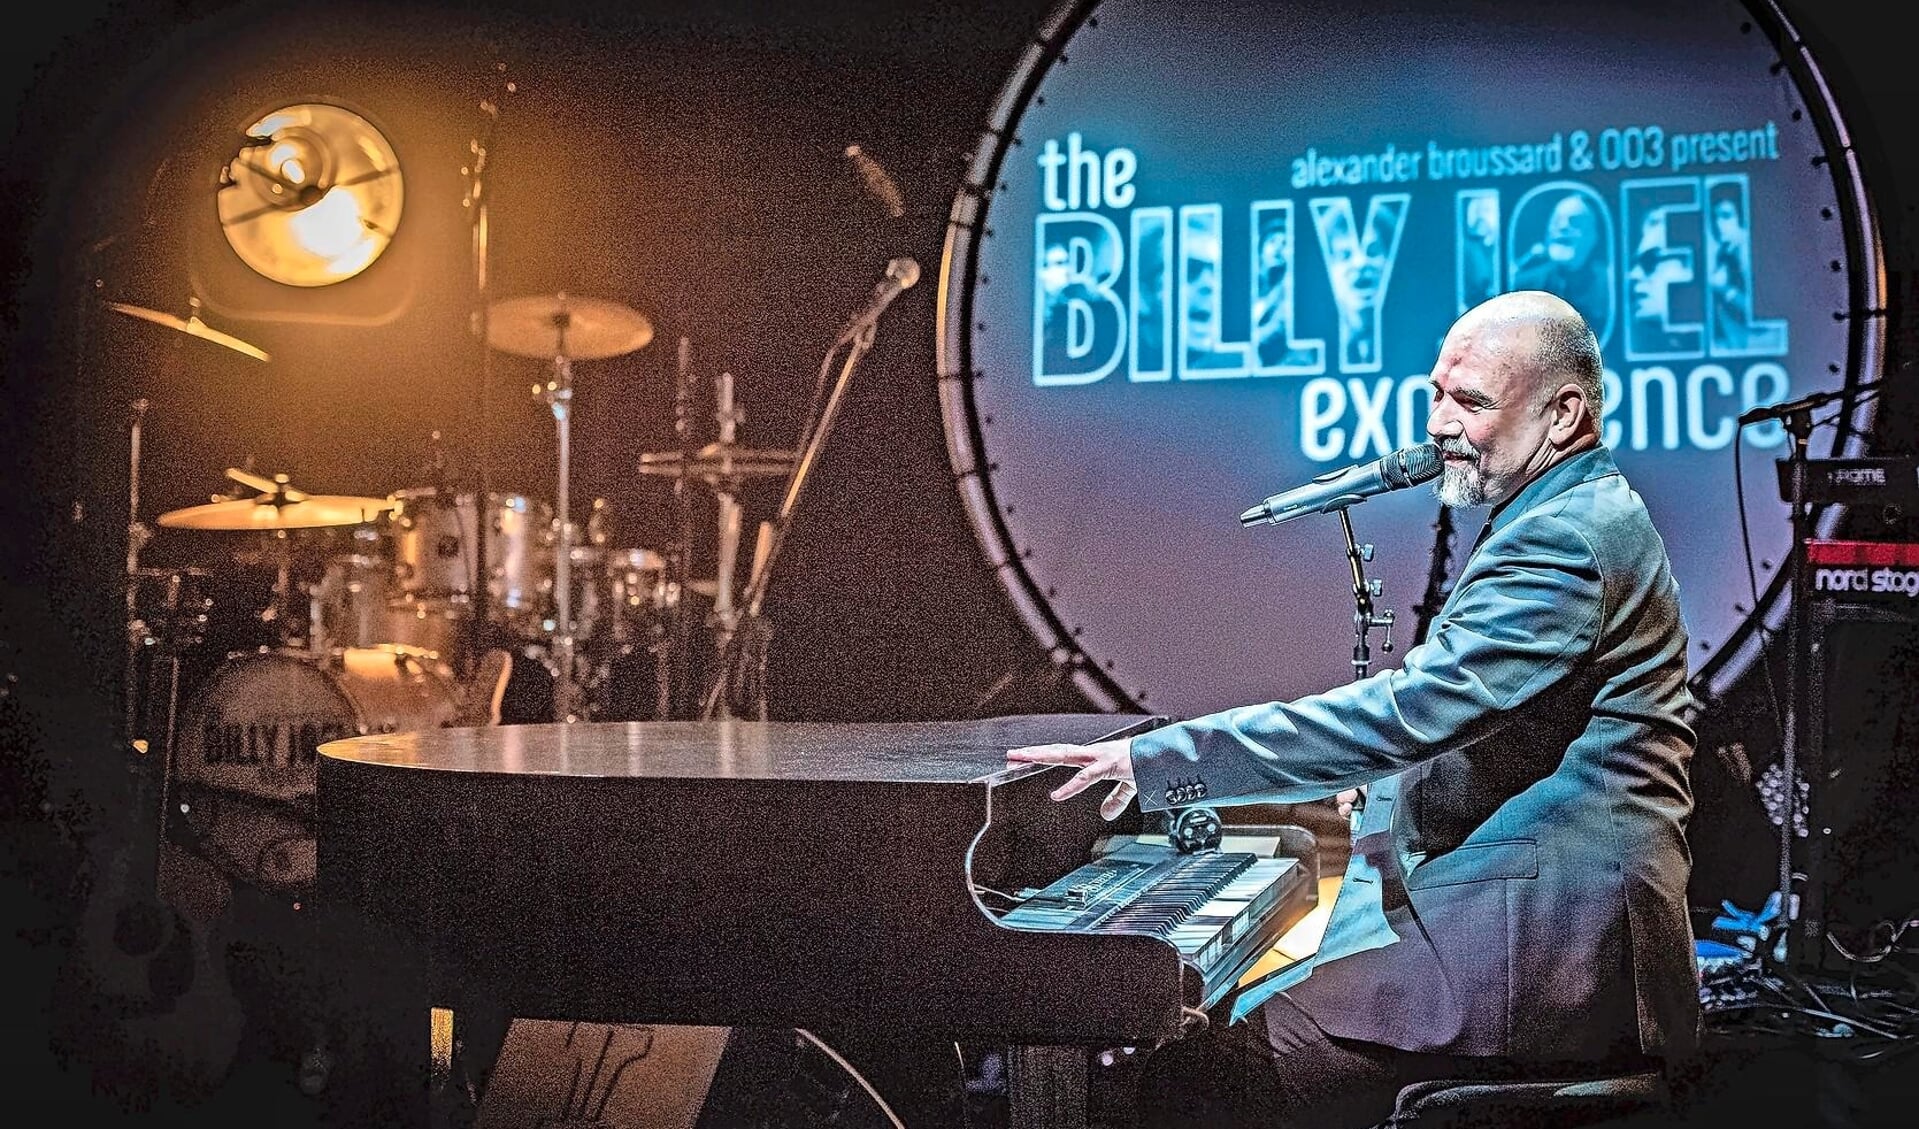 The Billy Joel Experience / Alexander Broussard & 003